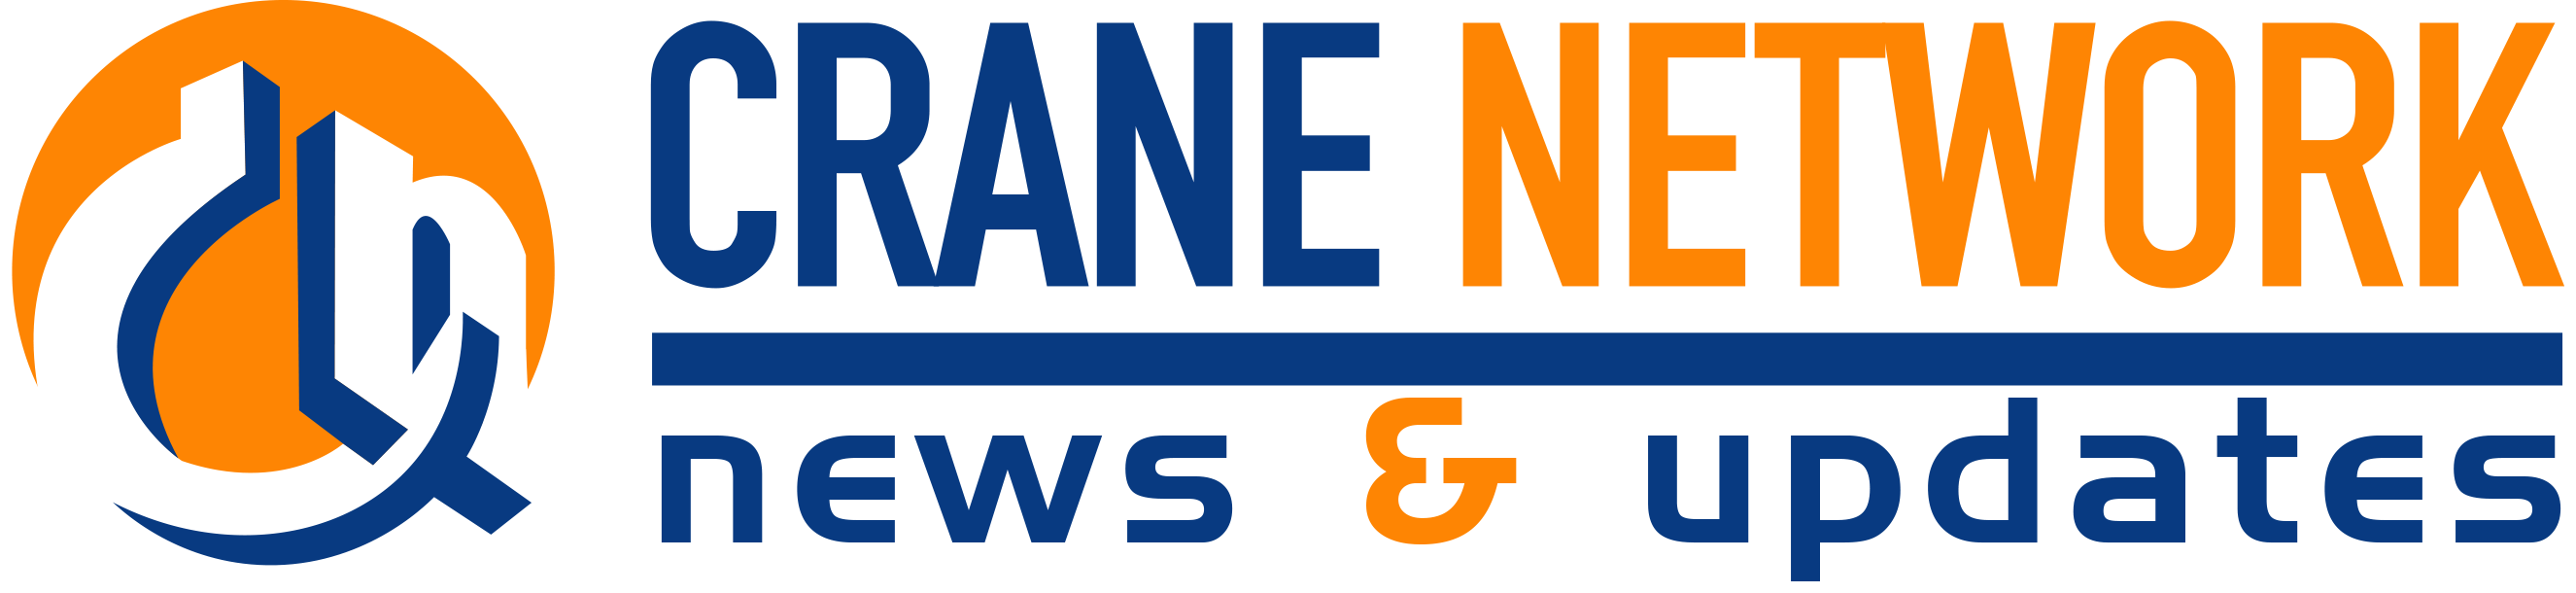 Crane Network News